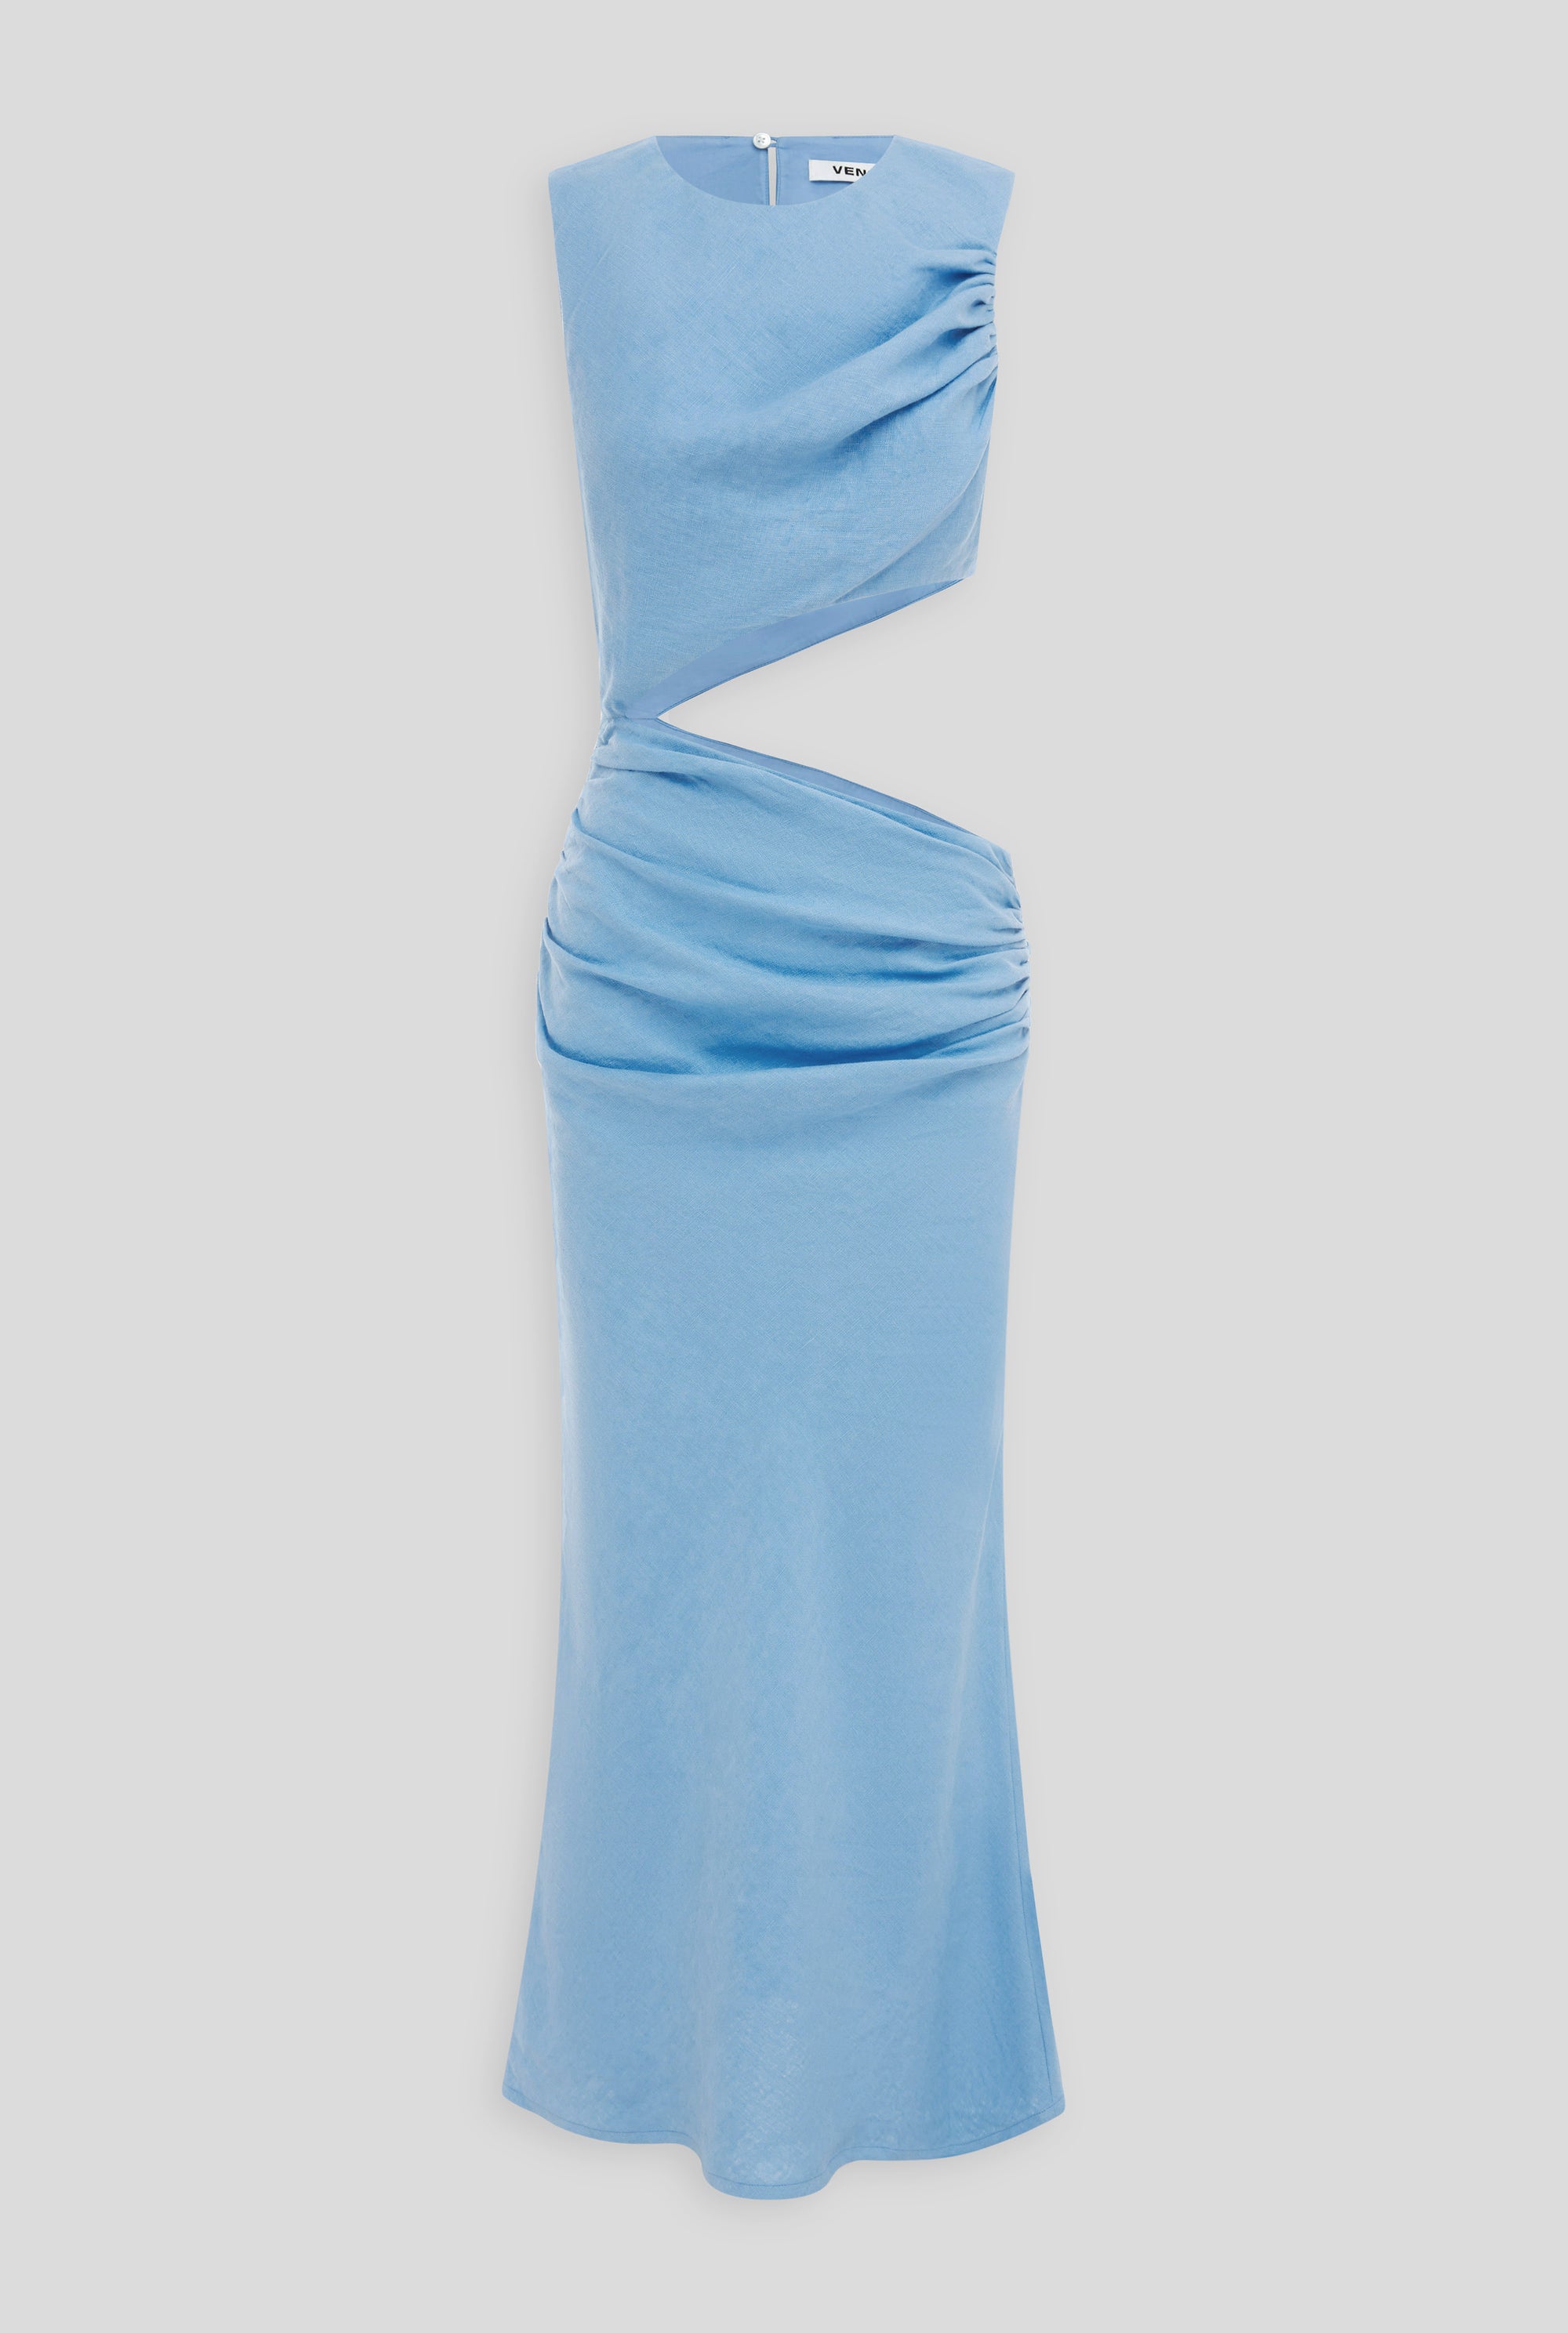 Linen Cut Out Dress - Bright Blue